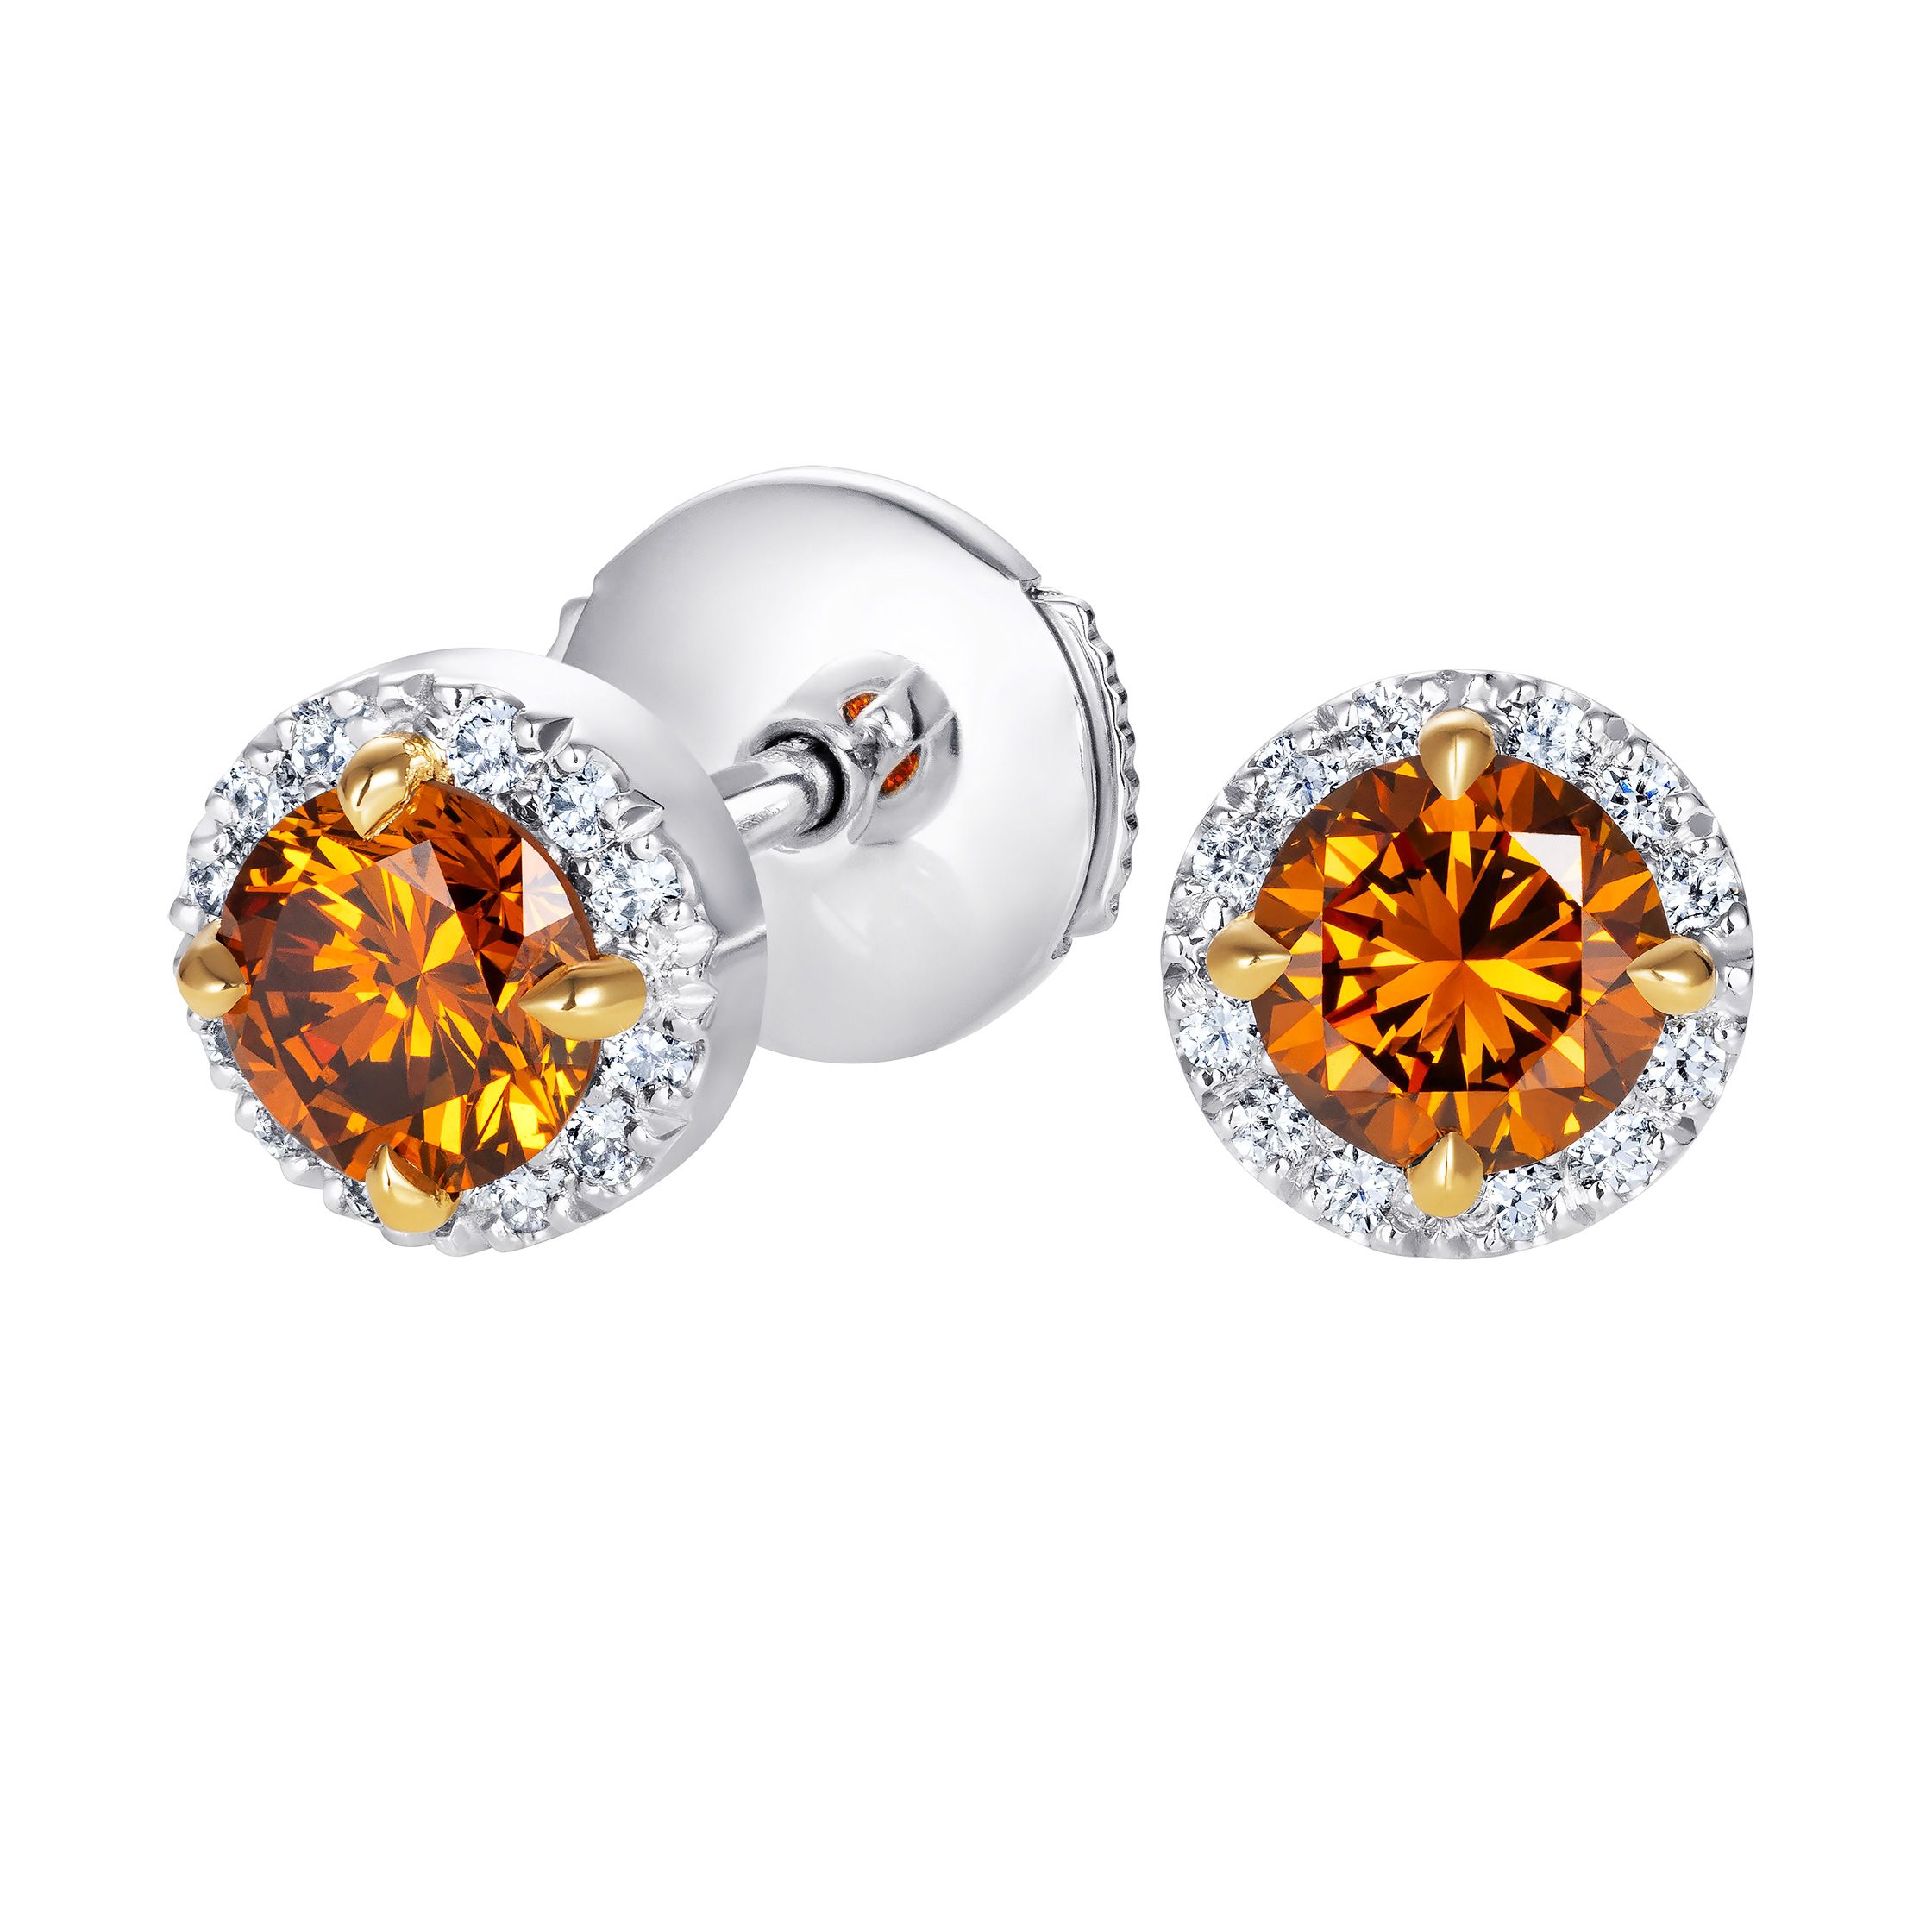 1.46 carat Fancy Intense Yellow Diamond Stud Earrings | Cynthia Britt